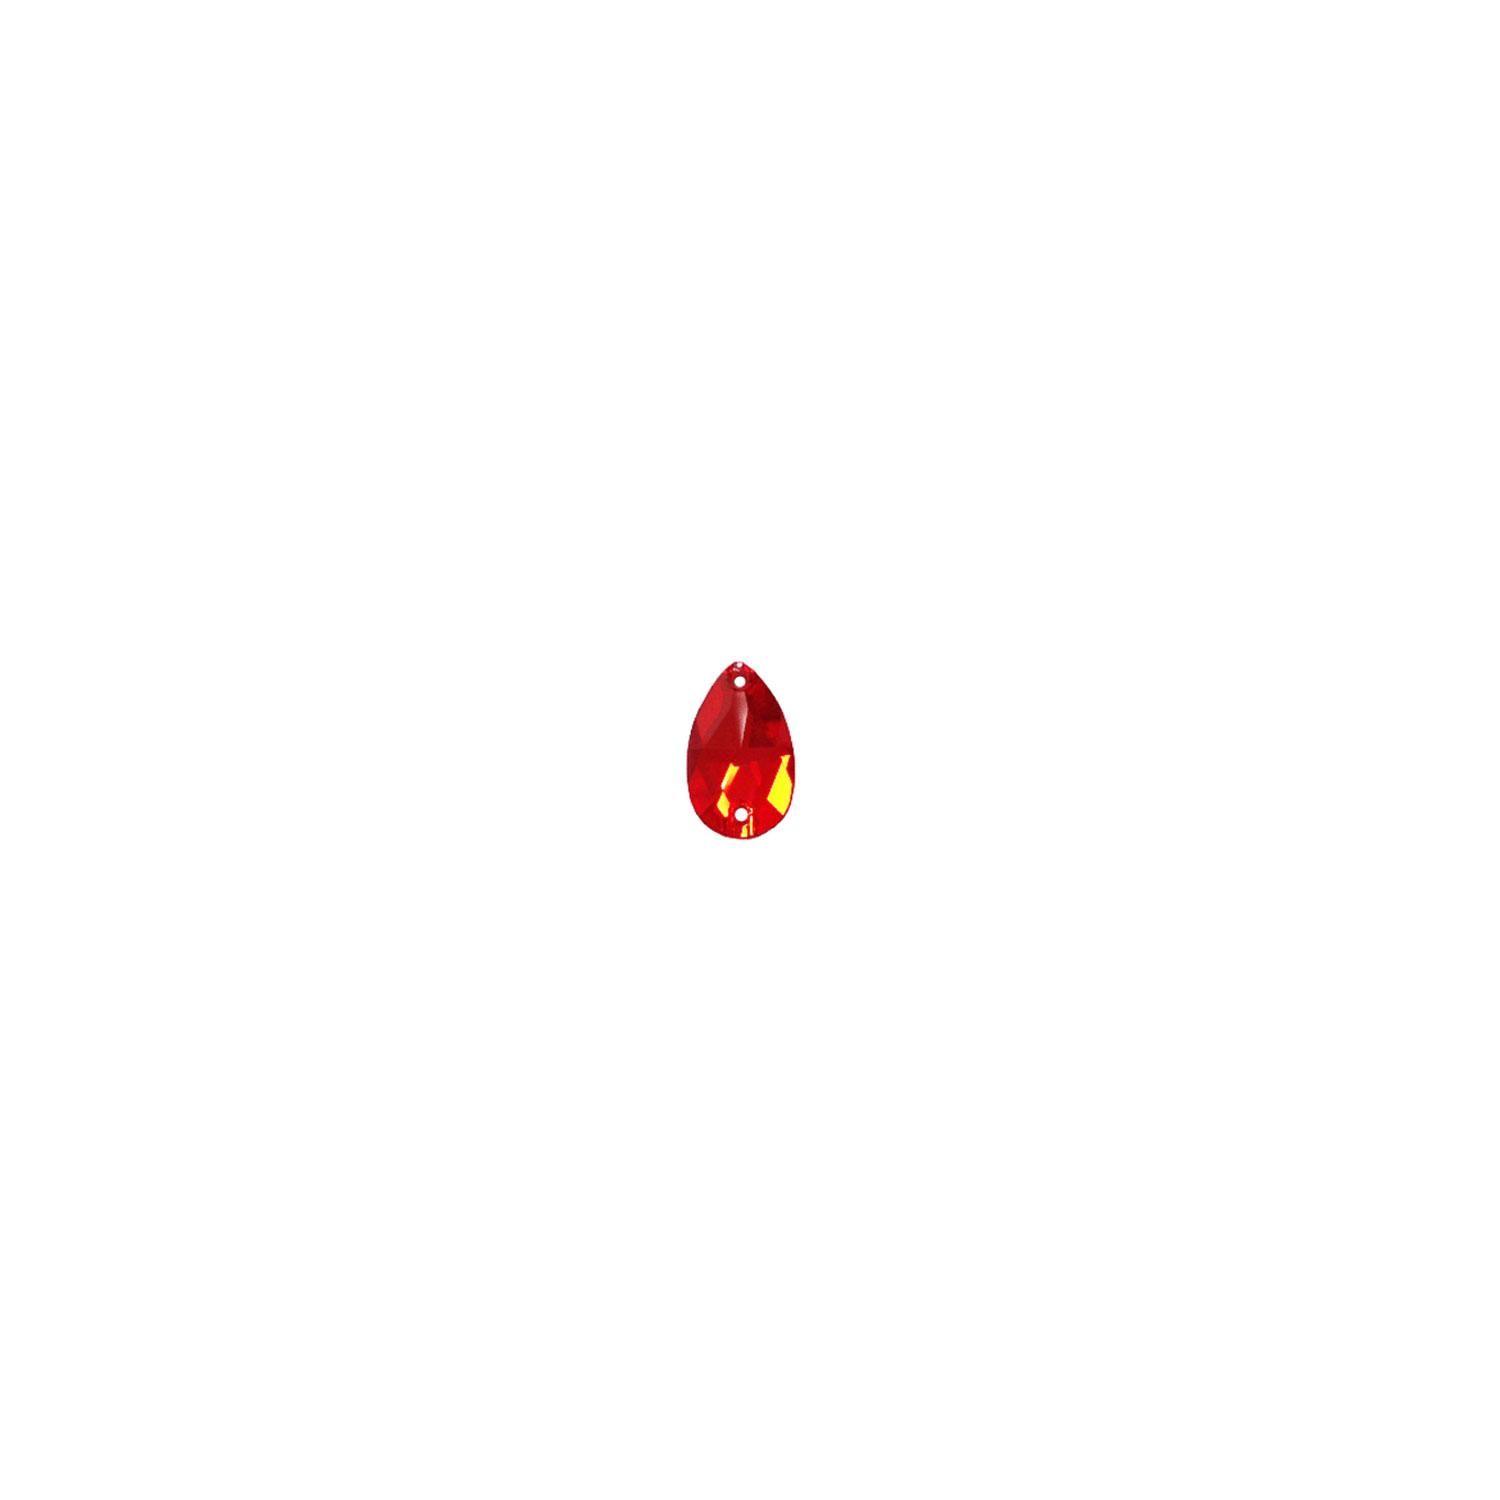 Red Circle with White Teardrop Logo - TEARDROP SEW ON 12MM LIGHT SIAM